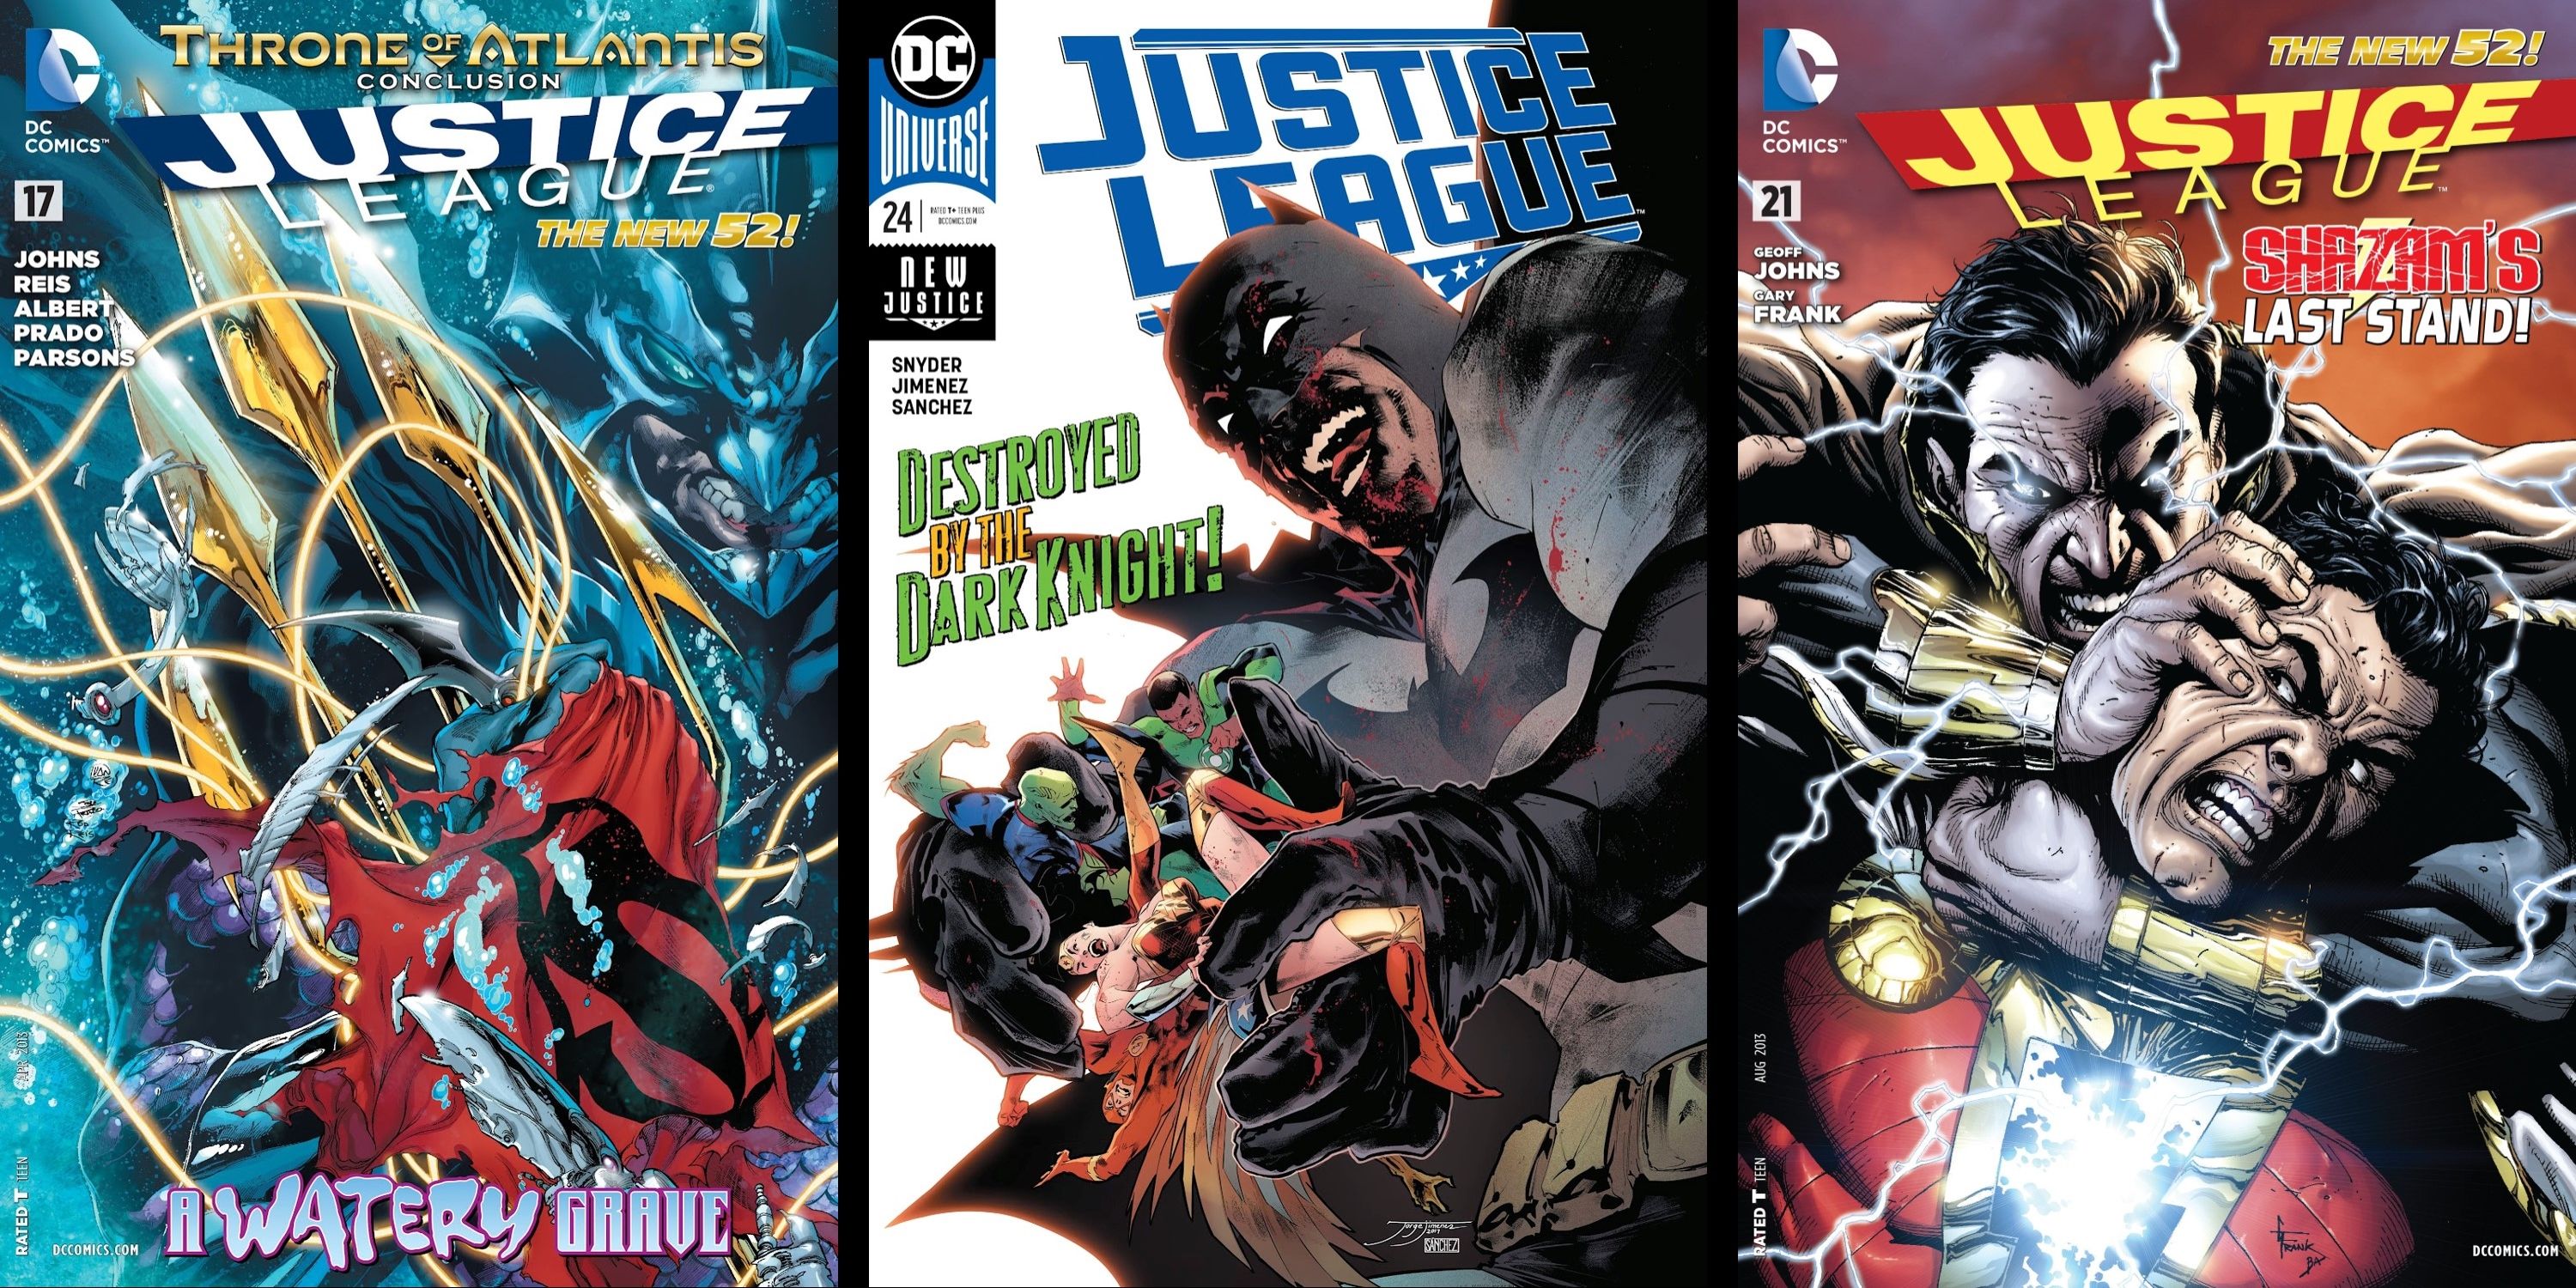 Split Image of Justice League covers with Aquaman's trident, Batman vs the League and Shazam vs Black Adam